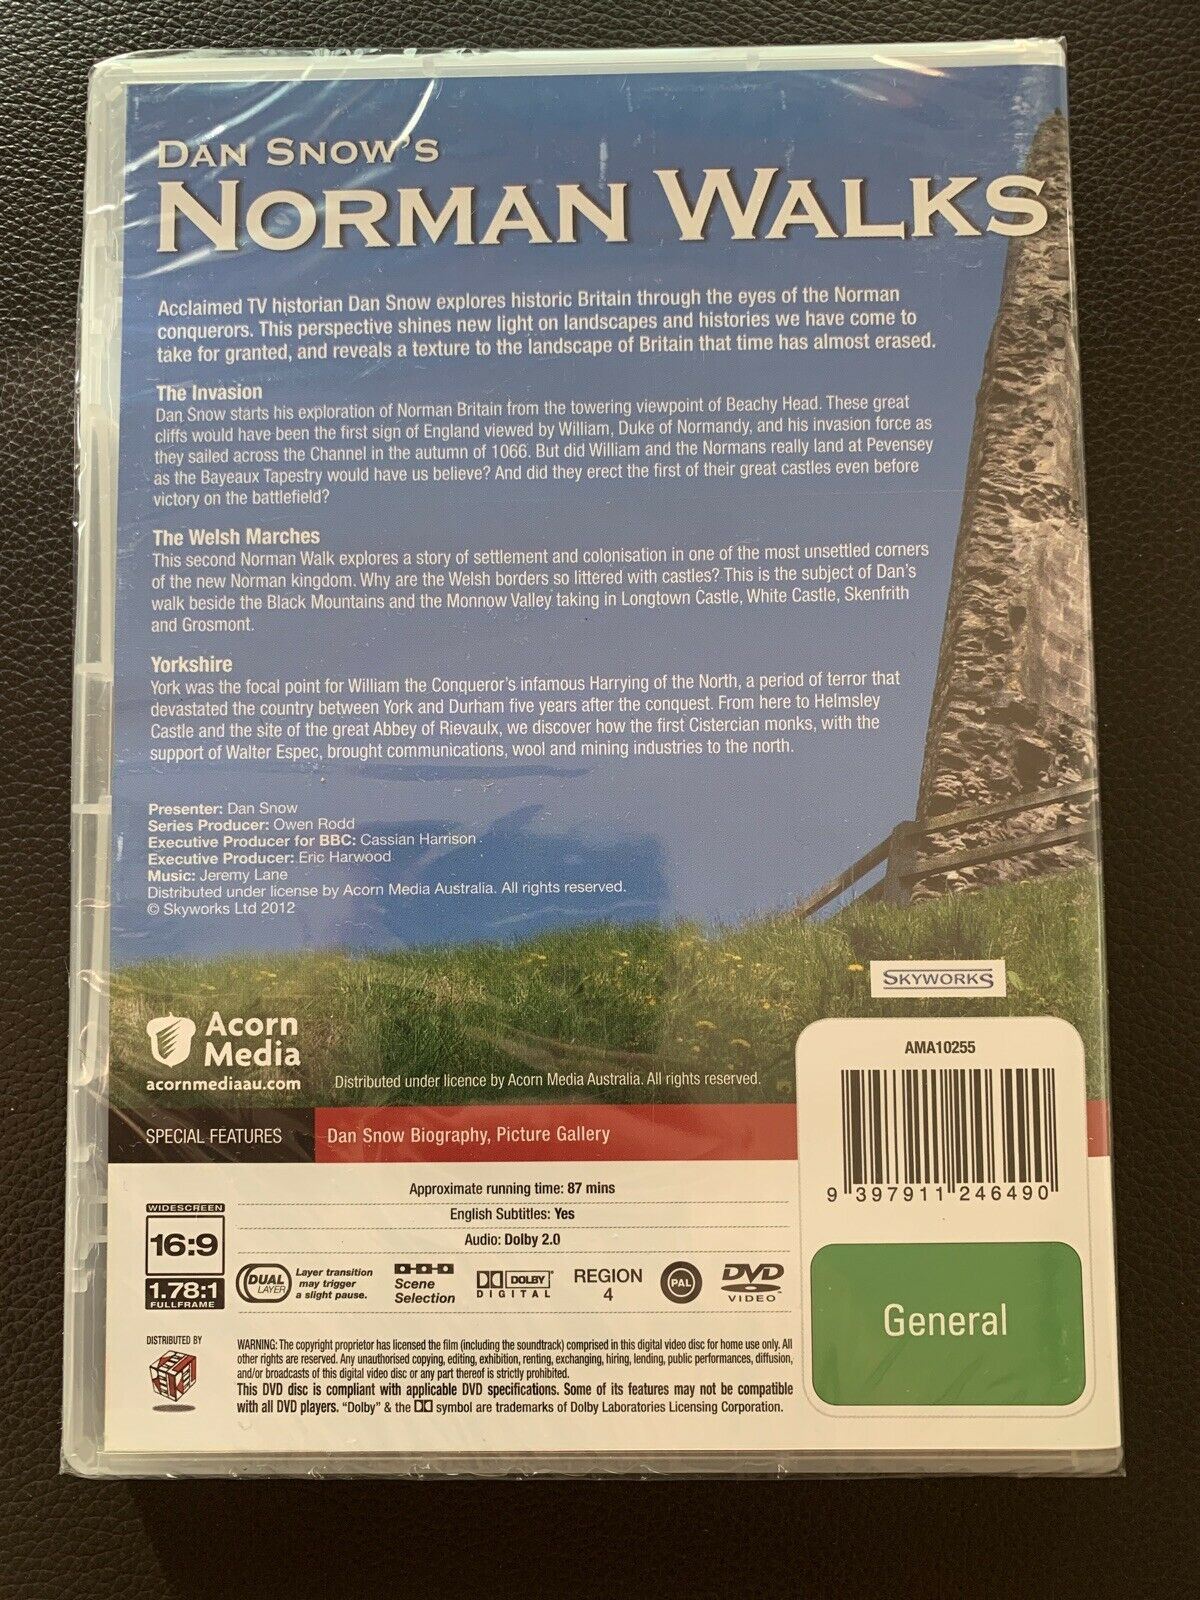 *New Sealed* Norman Walks - Exploring Historic Britain (DVD, 2015) BBC